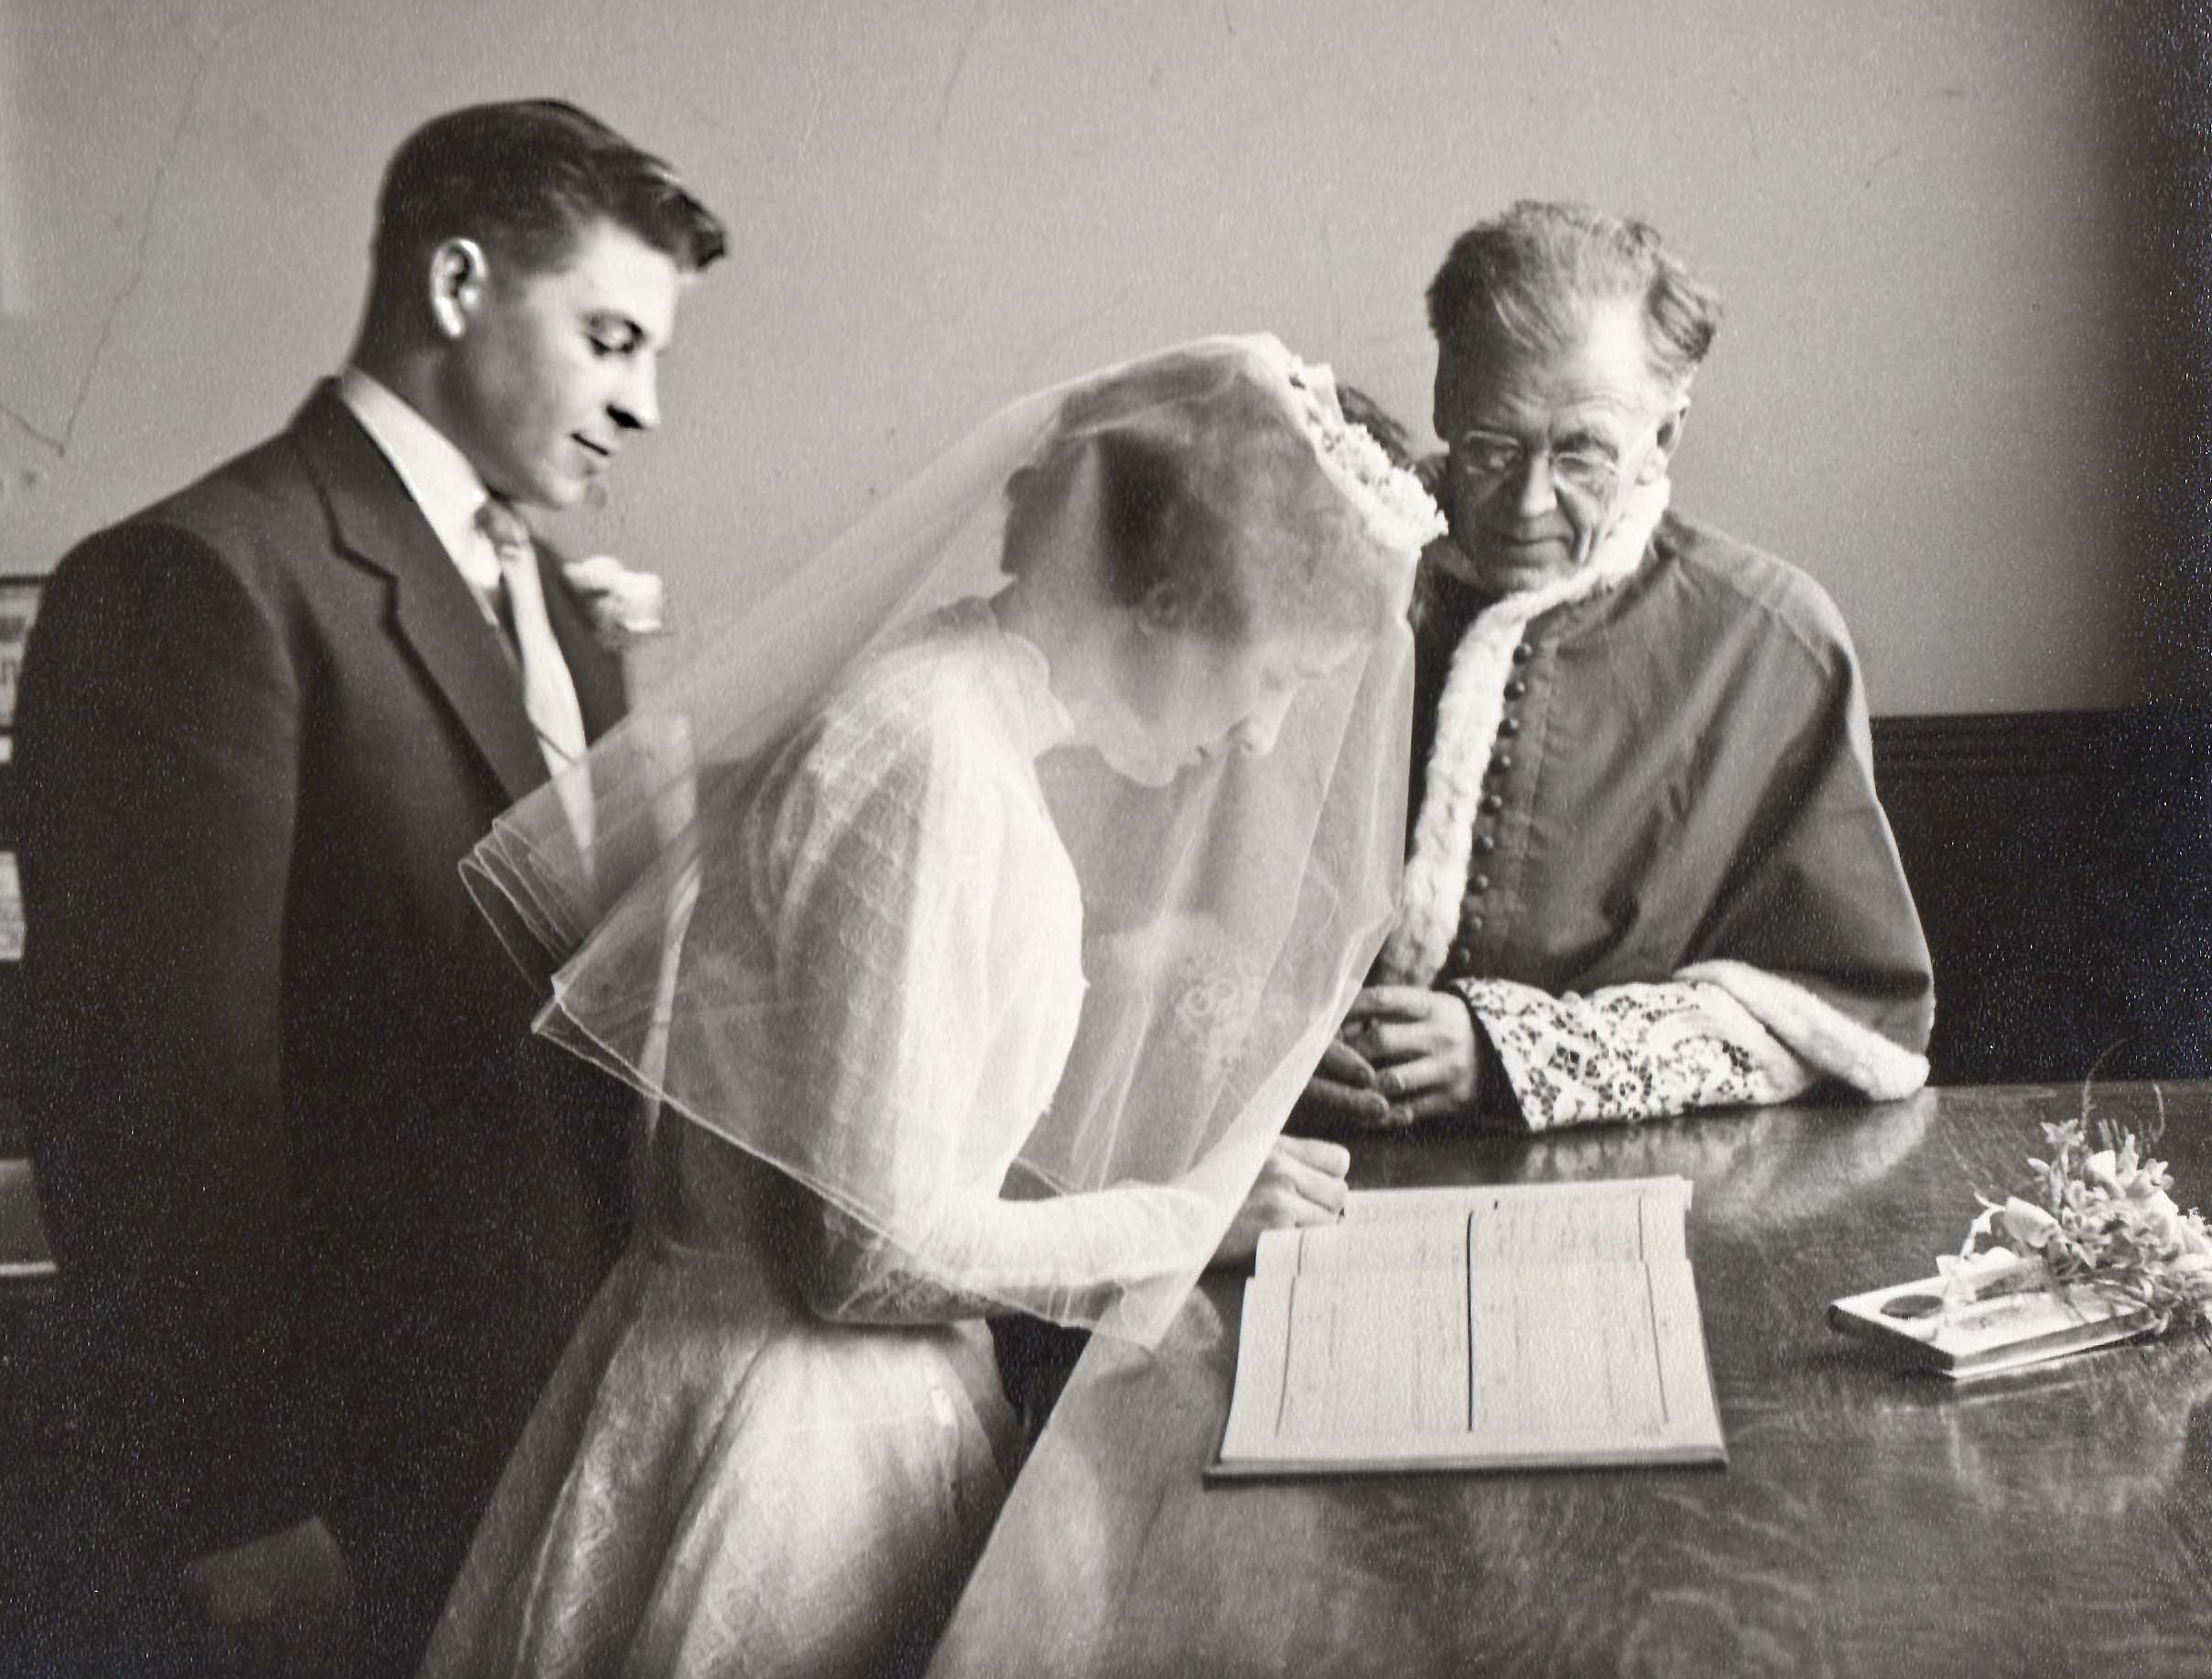 Pritchard wedding 1958